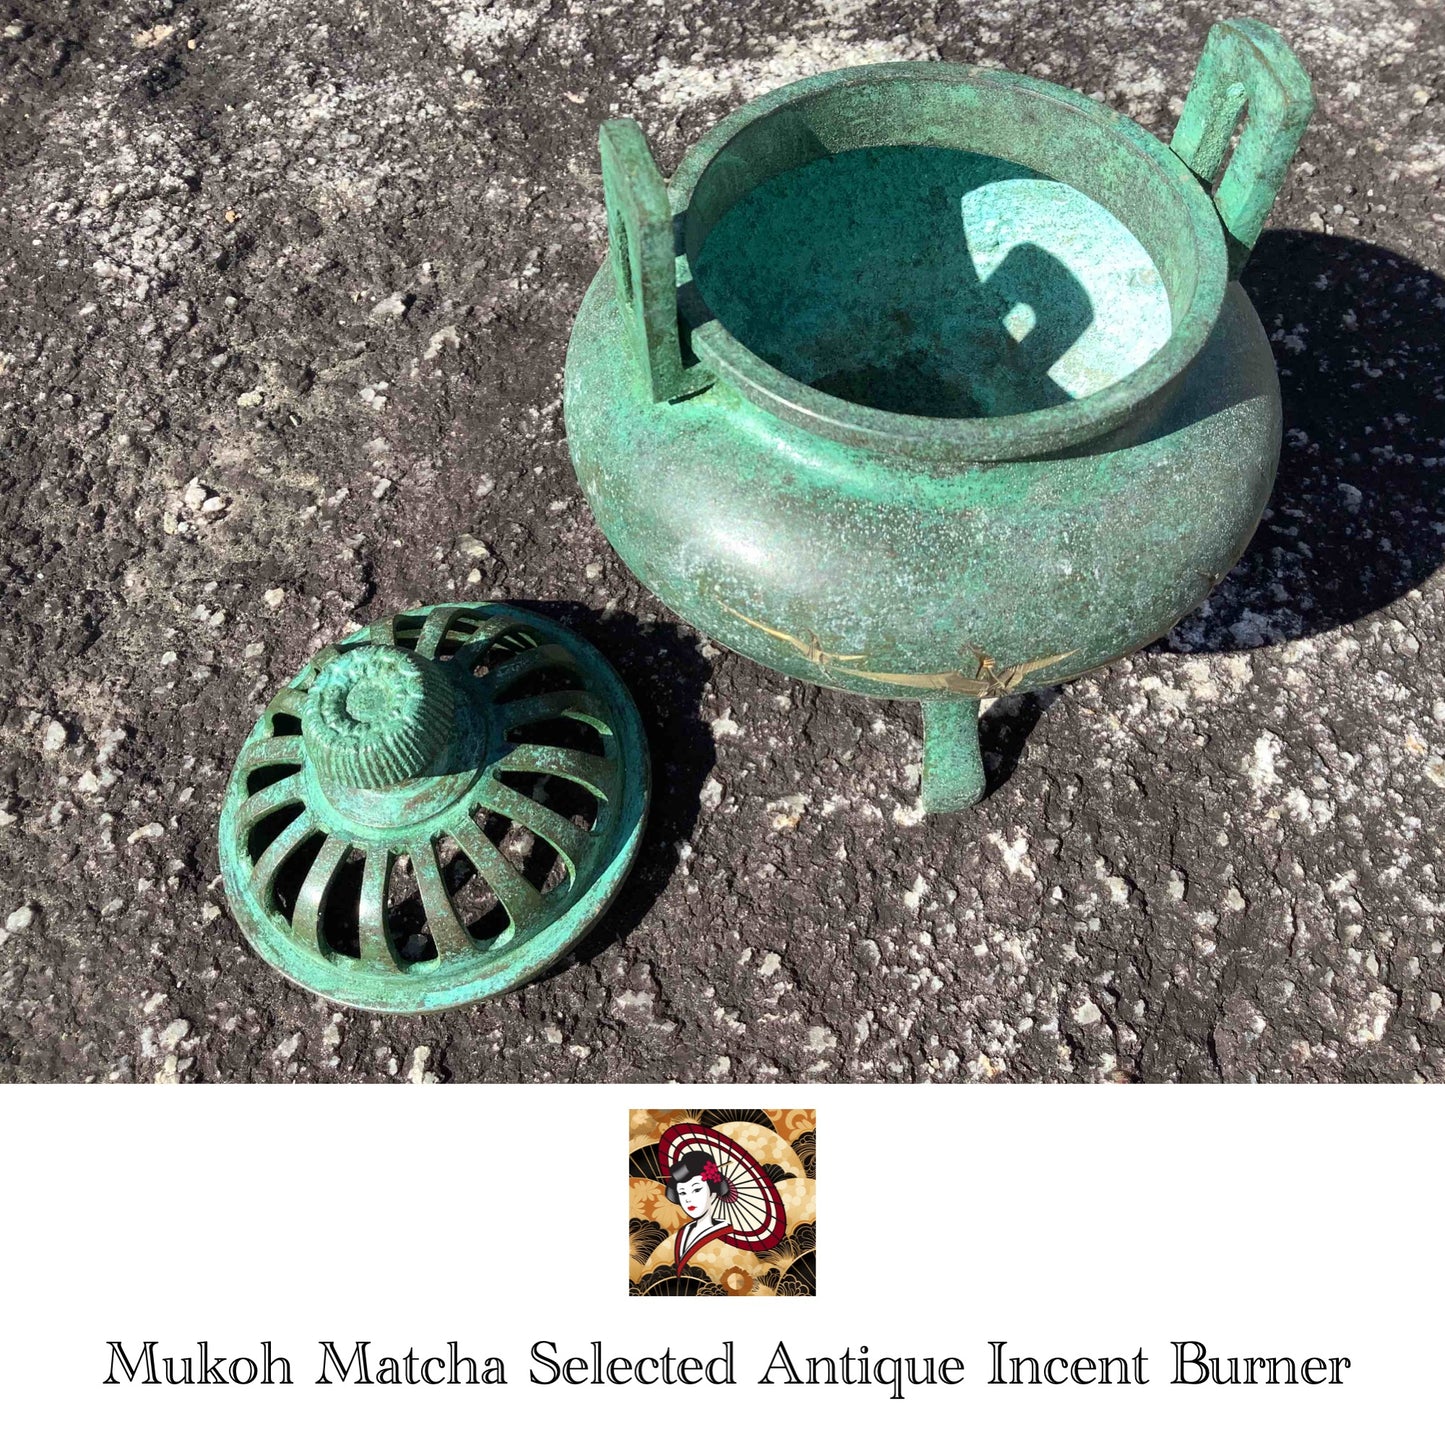 [Antique] Green, Gold Crain pattern round shape Incense Holder / Burner - Mukoh Matcha Selected